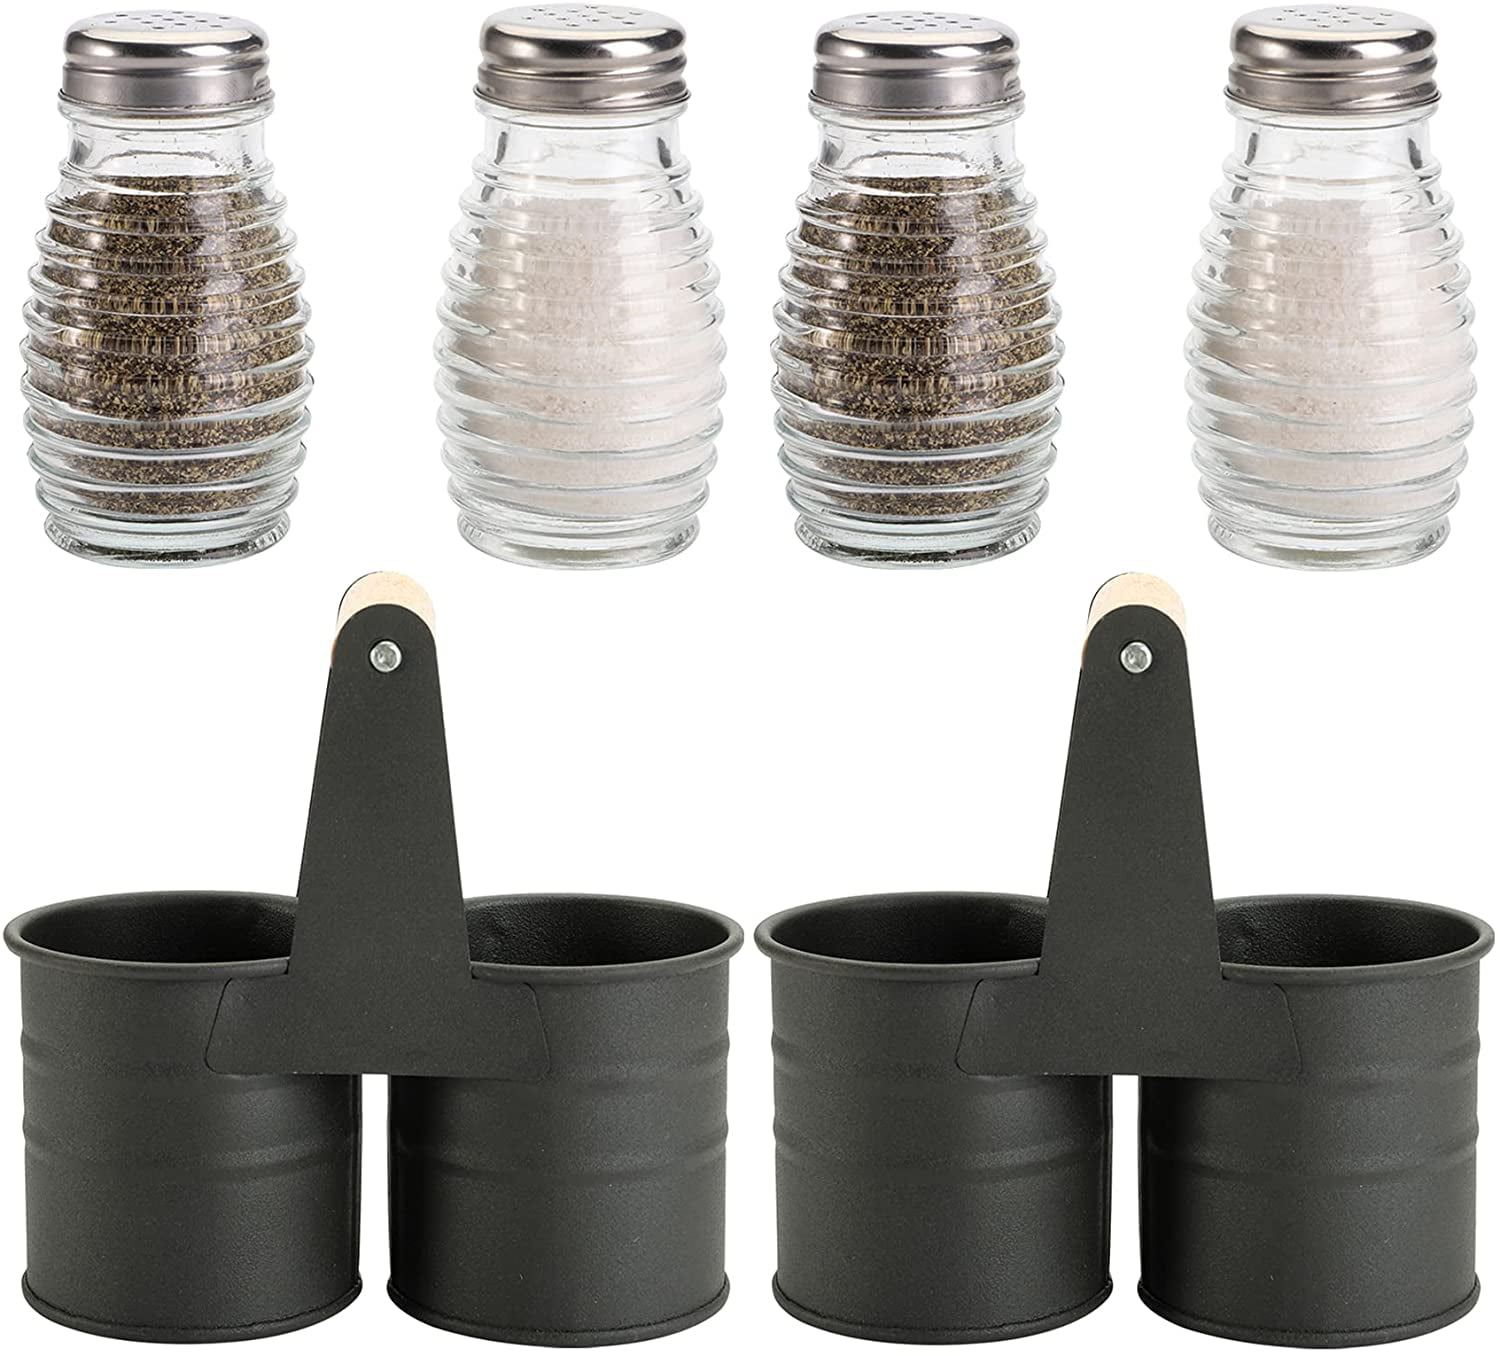 4 oz Ball Canning Jar Salt & Pepper Shaker 2-Pack 